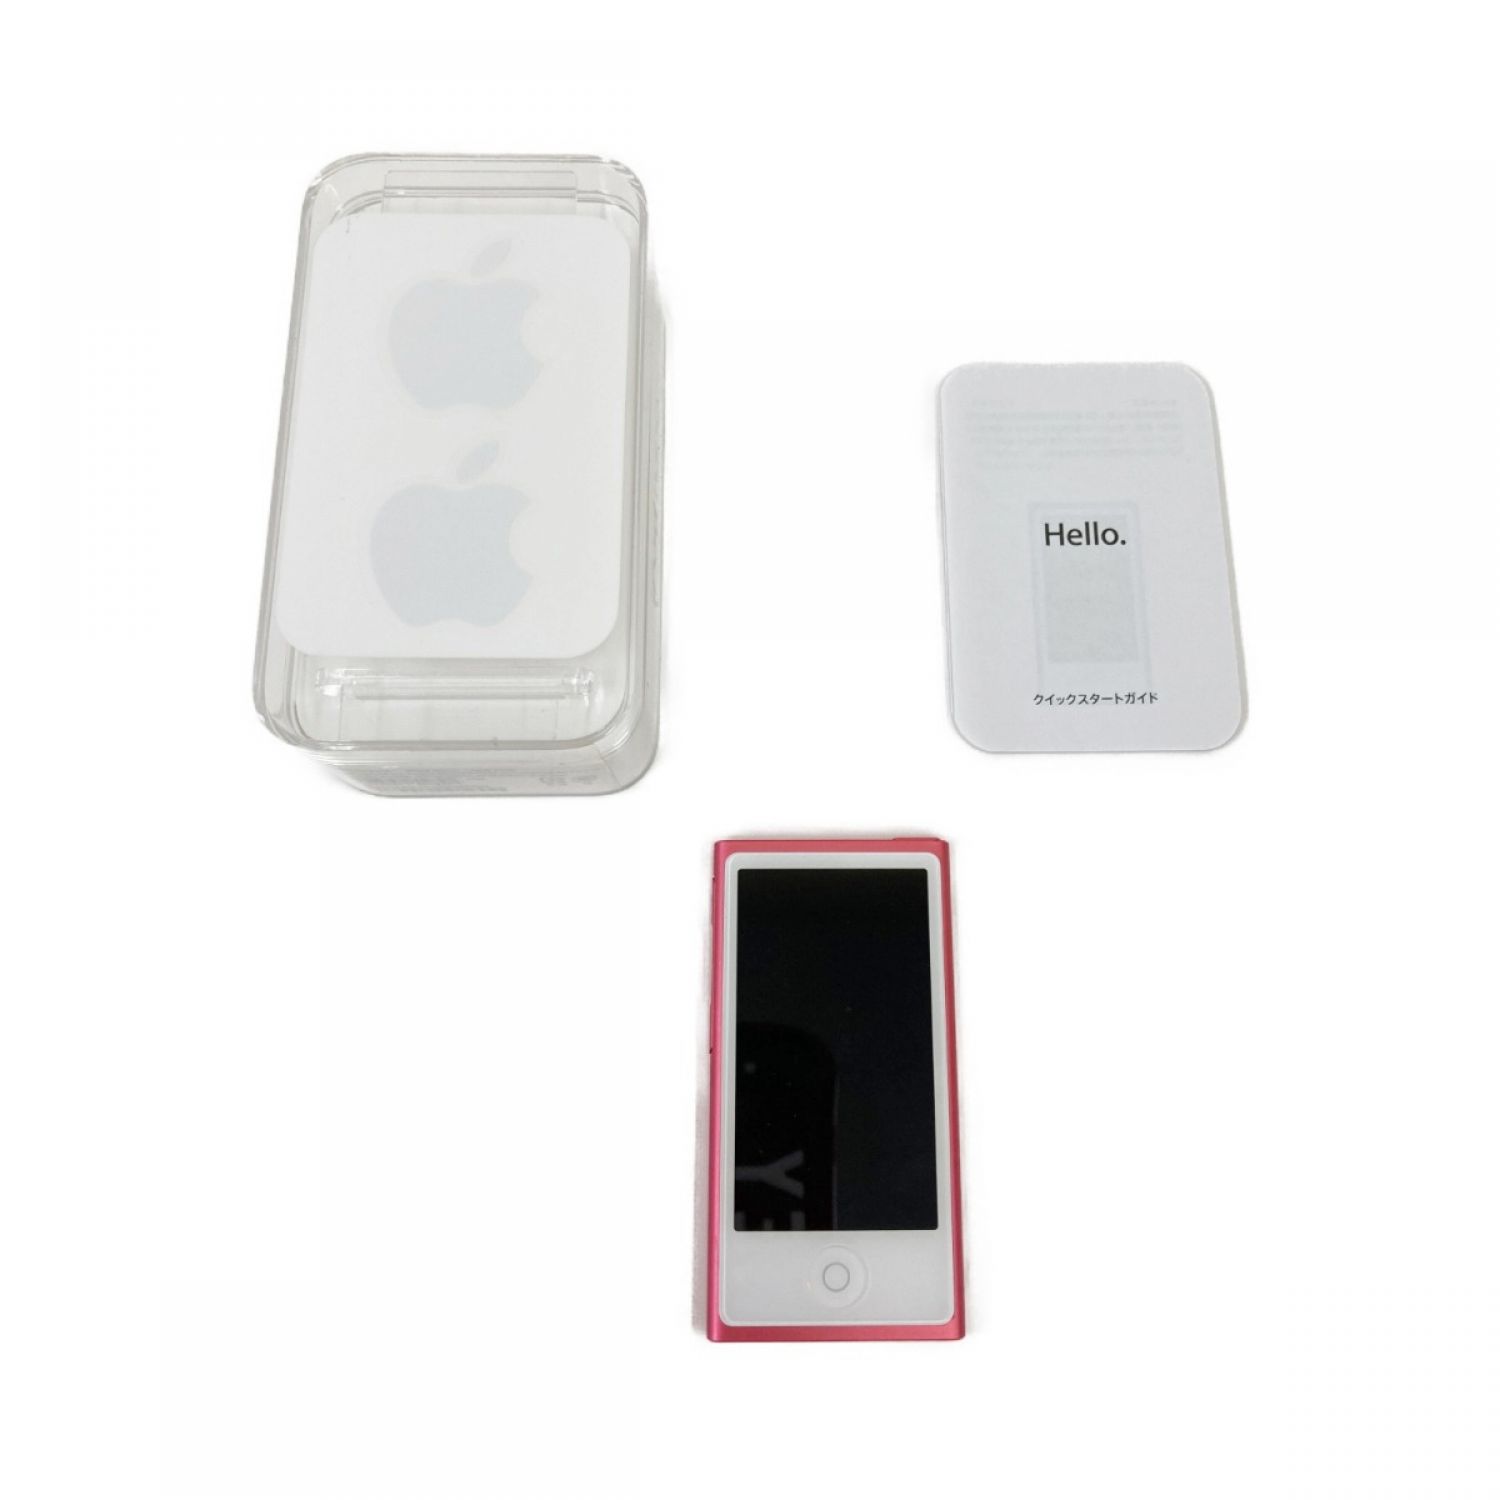 Apple アップル iPod nano 16GB